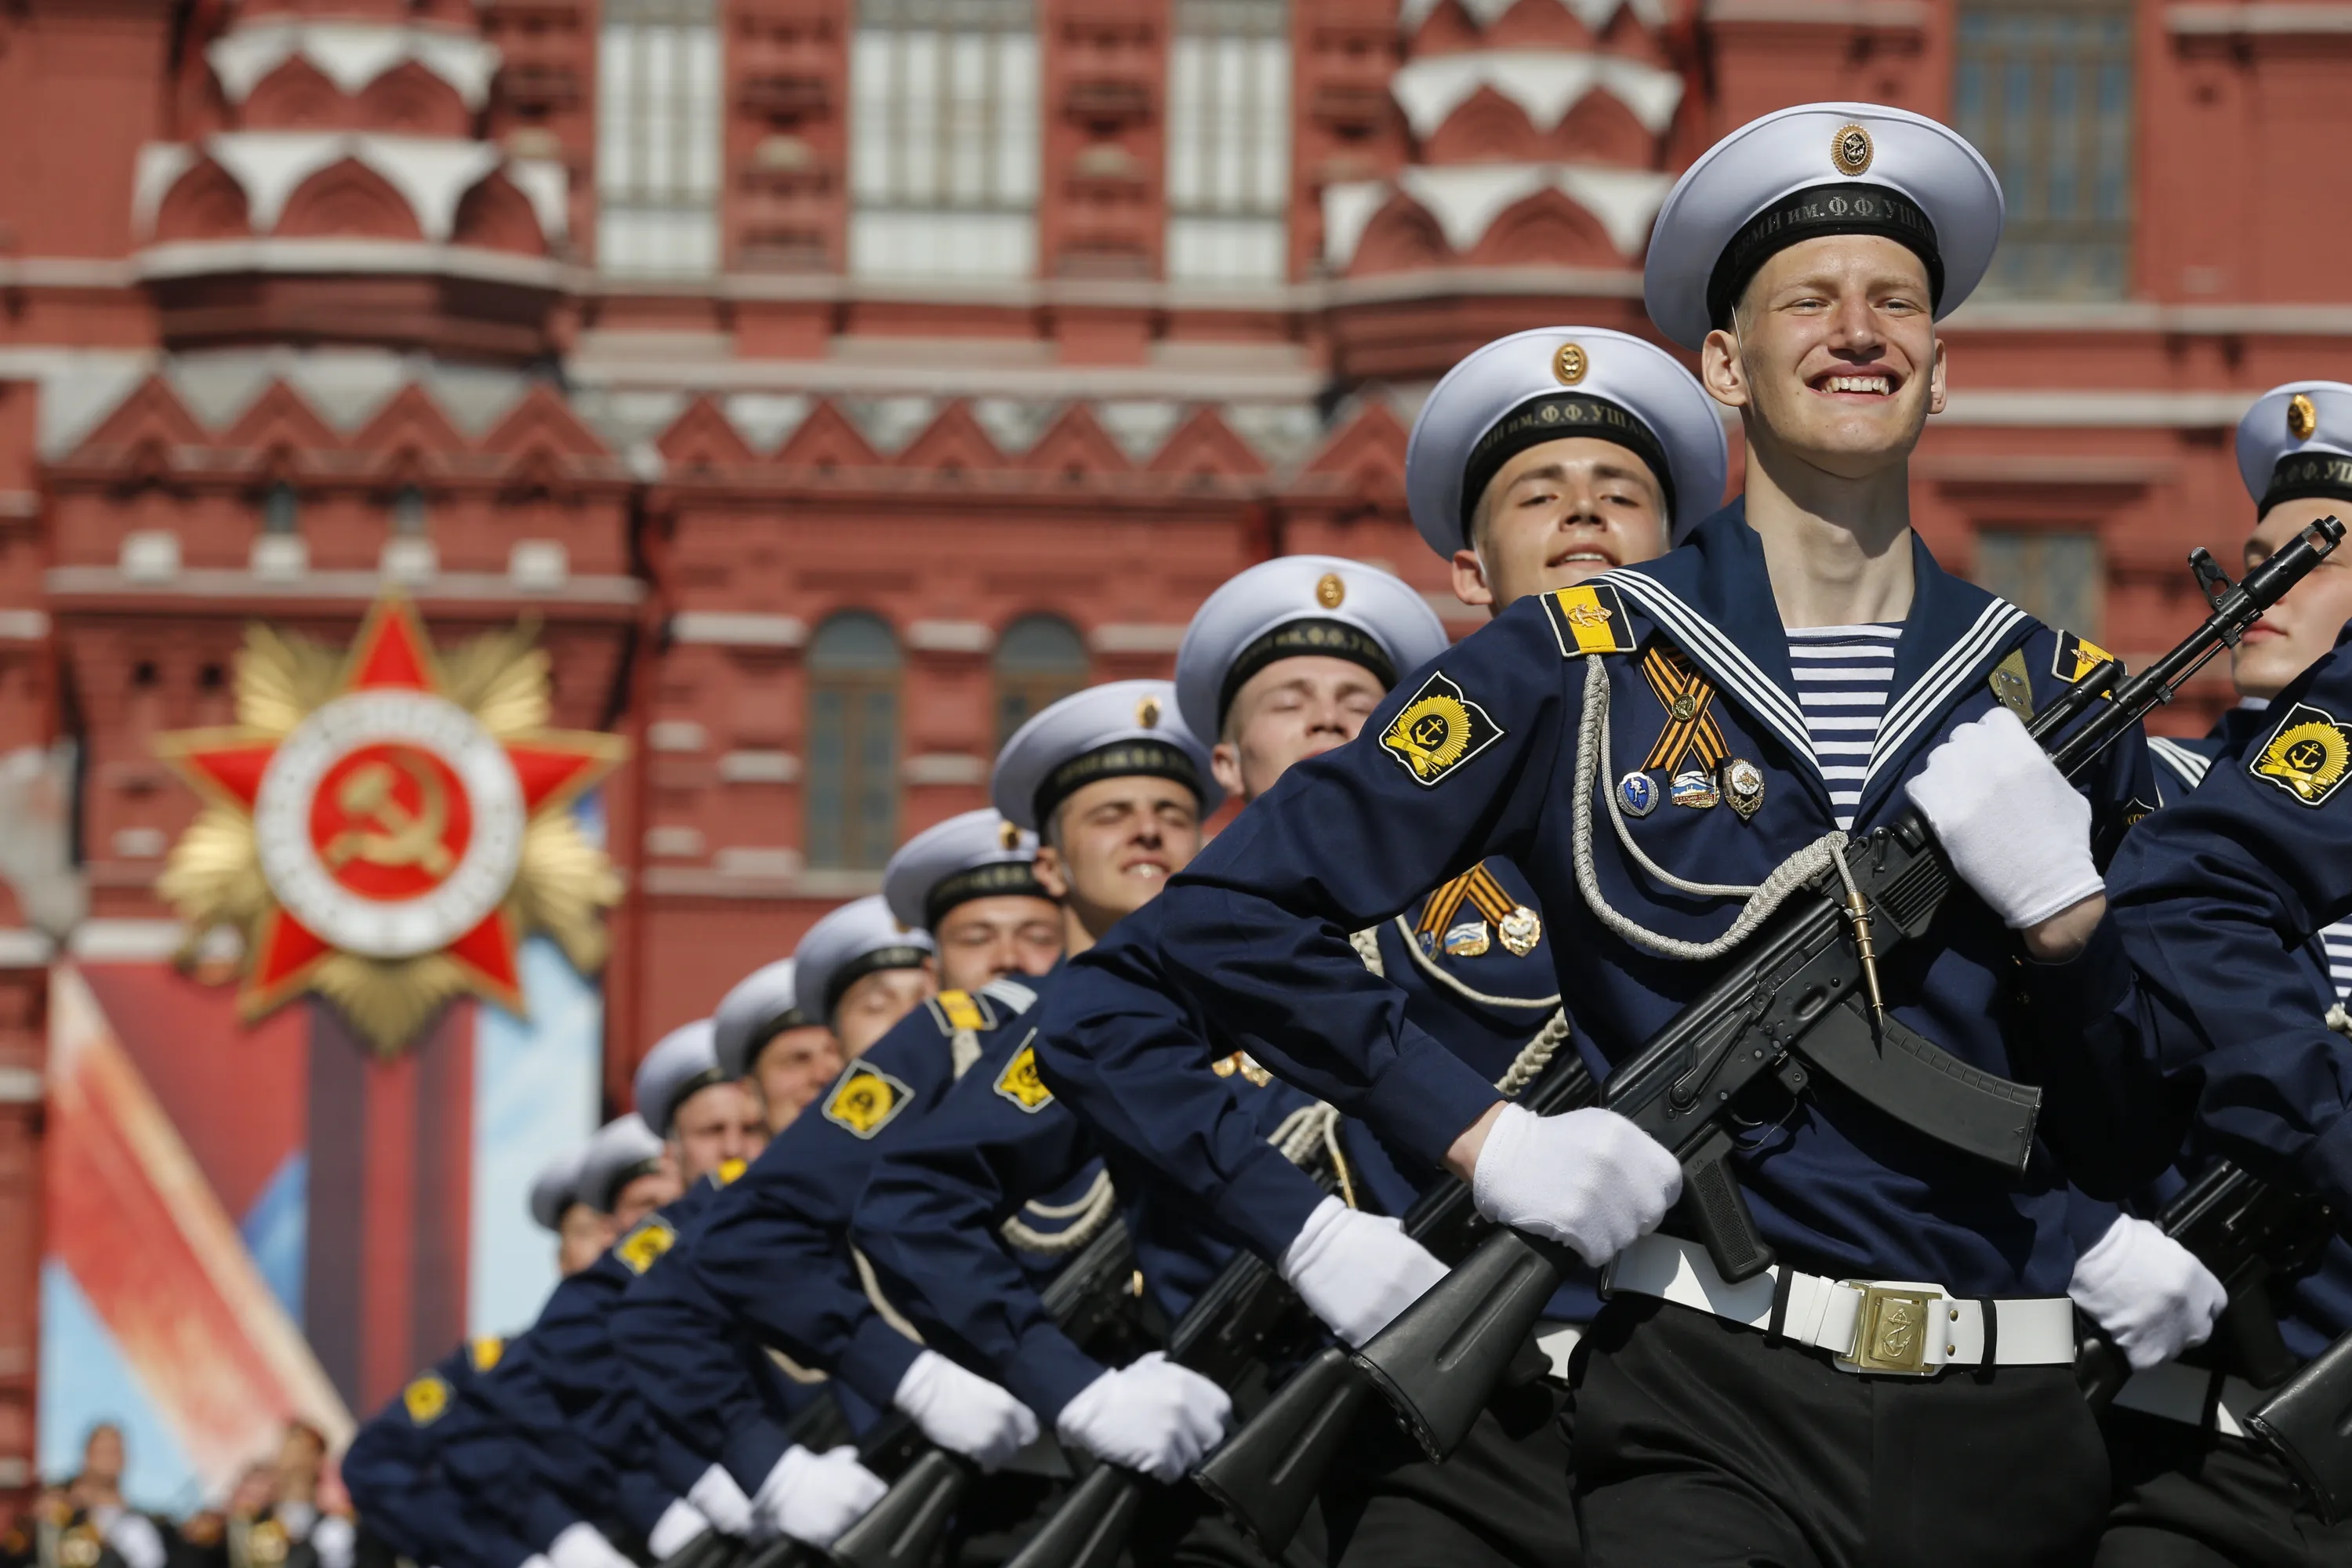 9 мая день победы солдат. Парад 9 мая. Солдаты на параде. Российский солдат на параде. Парад солдат на красной площади.